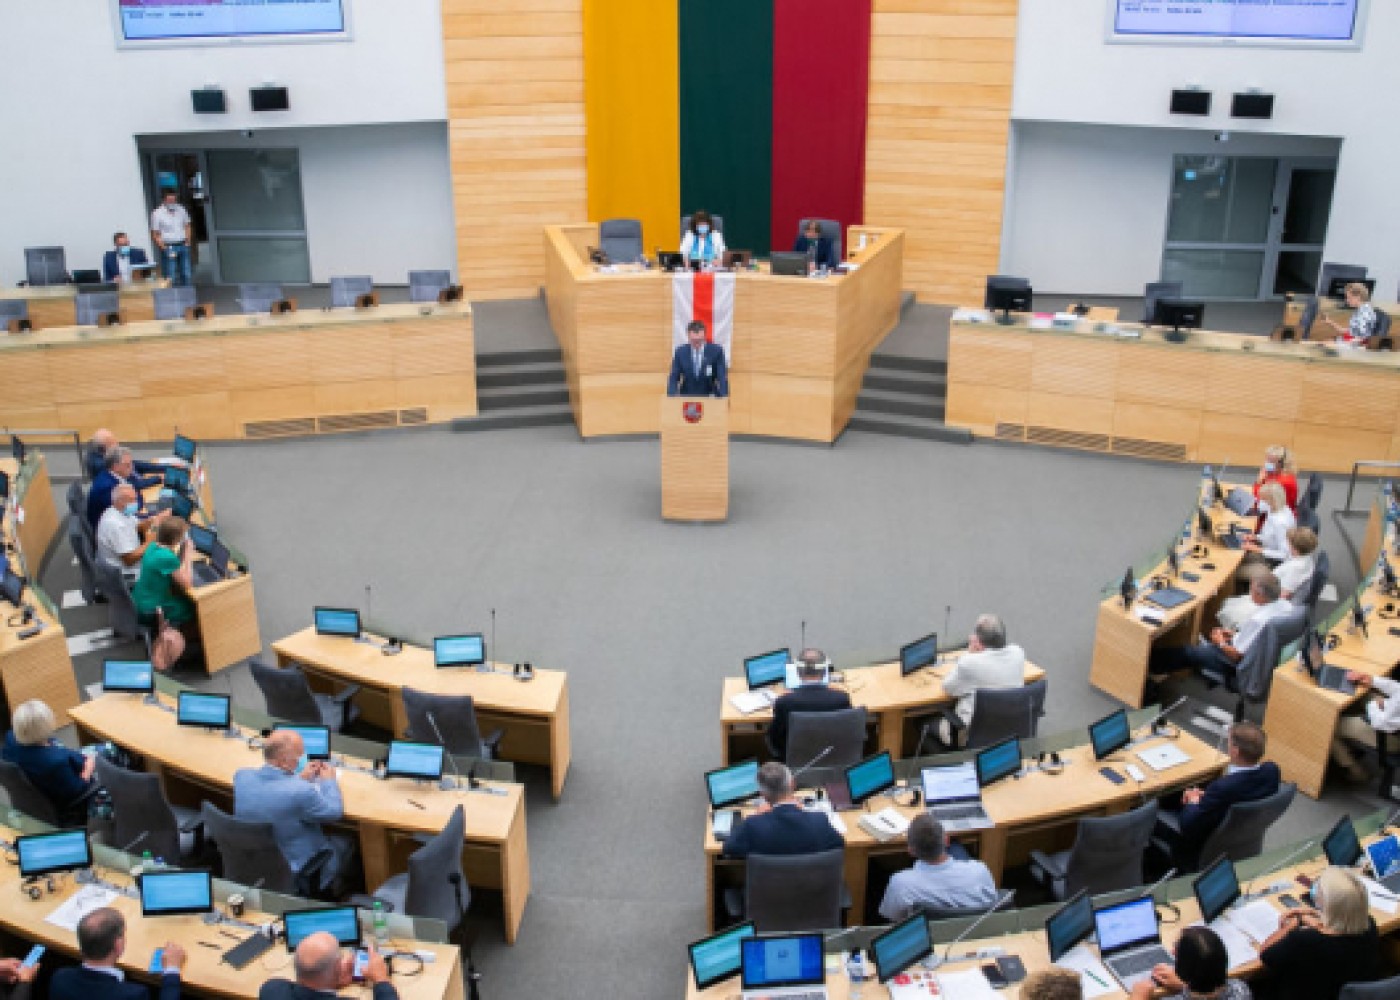 Litva parlamenti “Vaqner”i terror təşkilatı kimi TANIDI